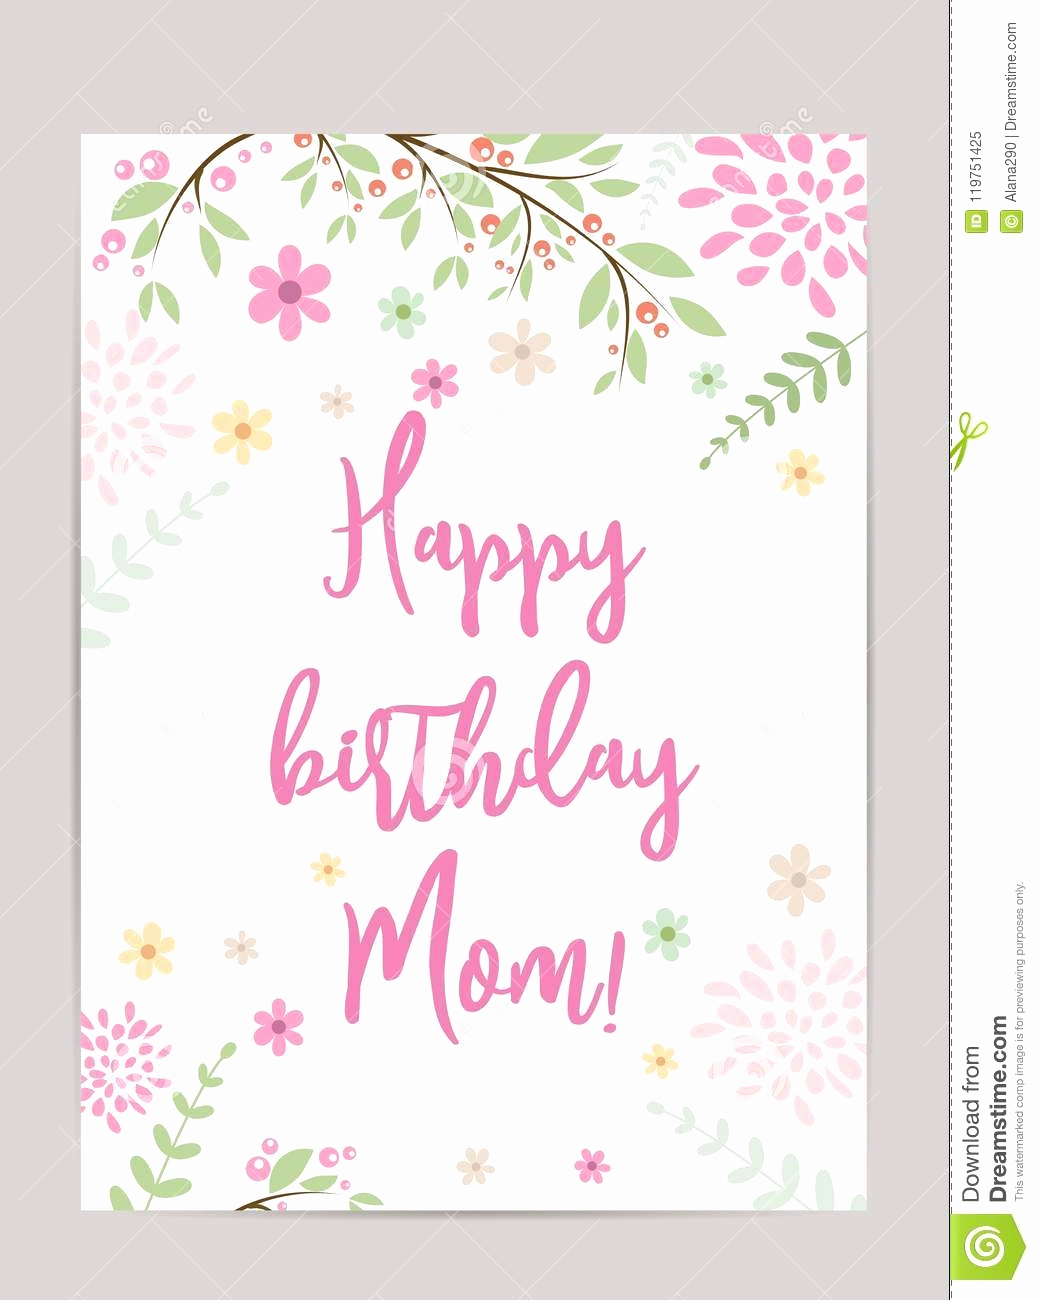 Happy Birthday Card Ideas For Mom 98 Happy Birthday Card Ideas For Mom 50th Birthday Card Ideas For